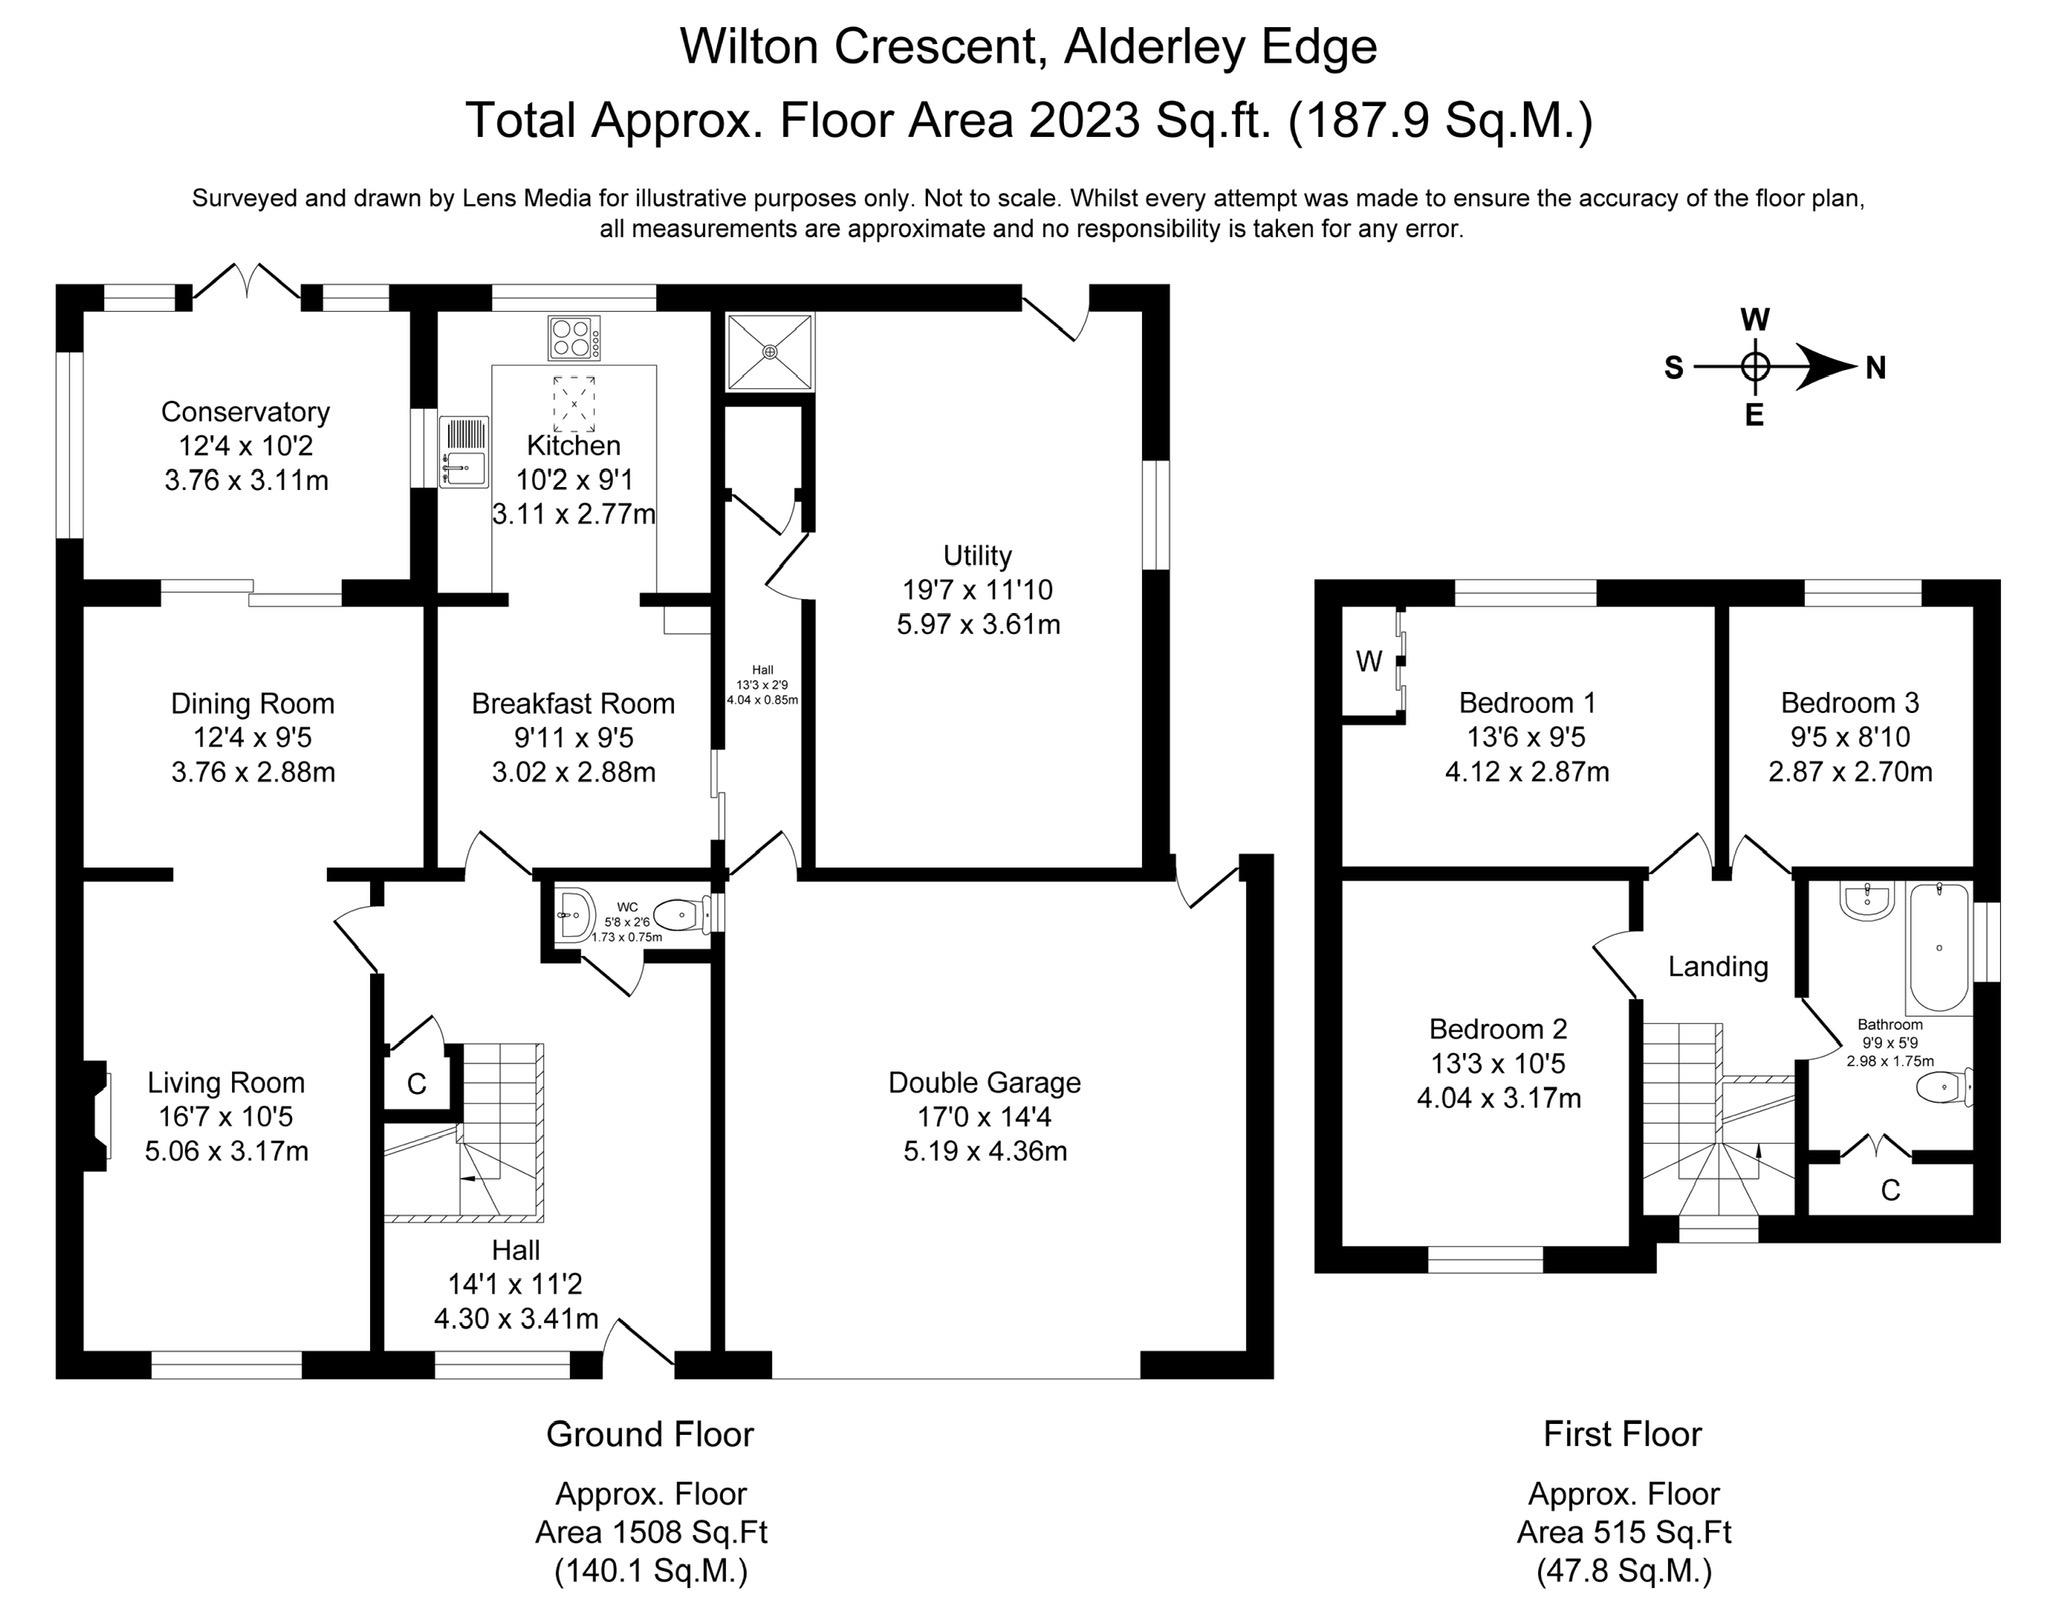 Floorplans For Wilton Crescent, Alderley Edge, Cheshire